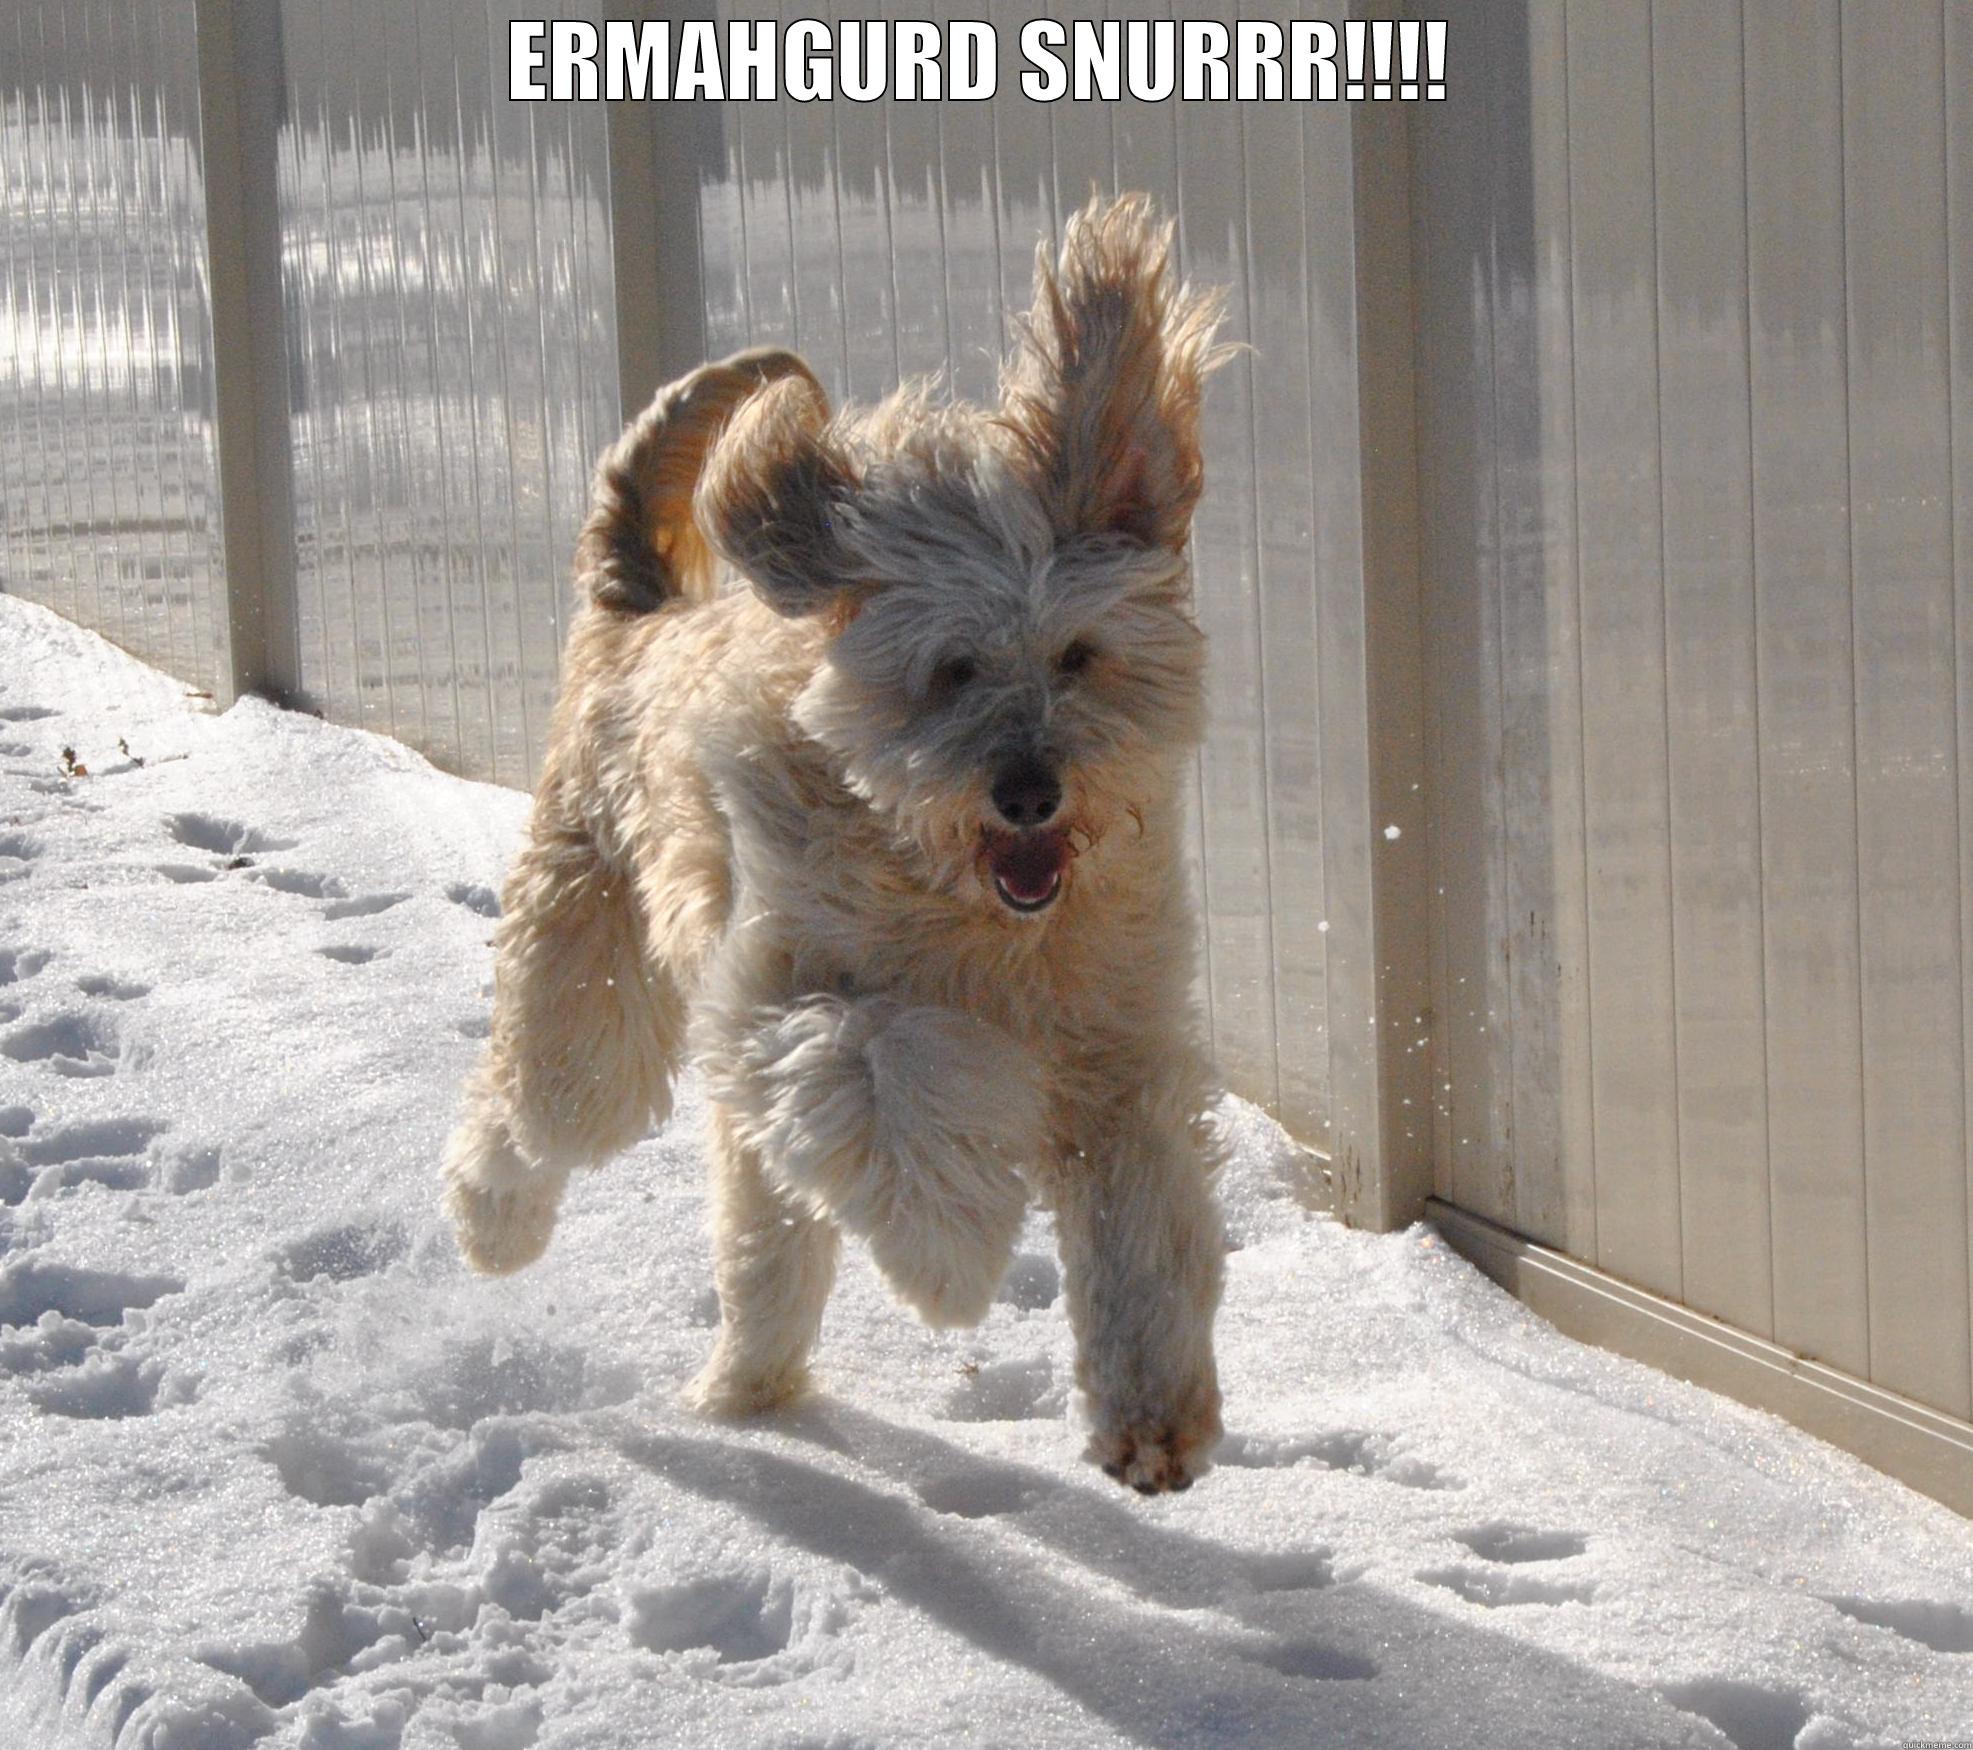 ERMAHGERD SNURR DOG - ERMAHGURD SNURRR!!!!  Misc